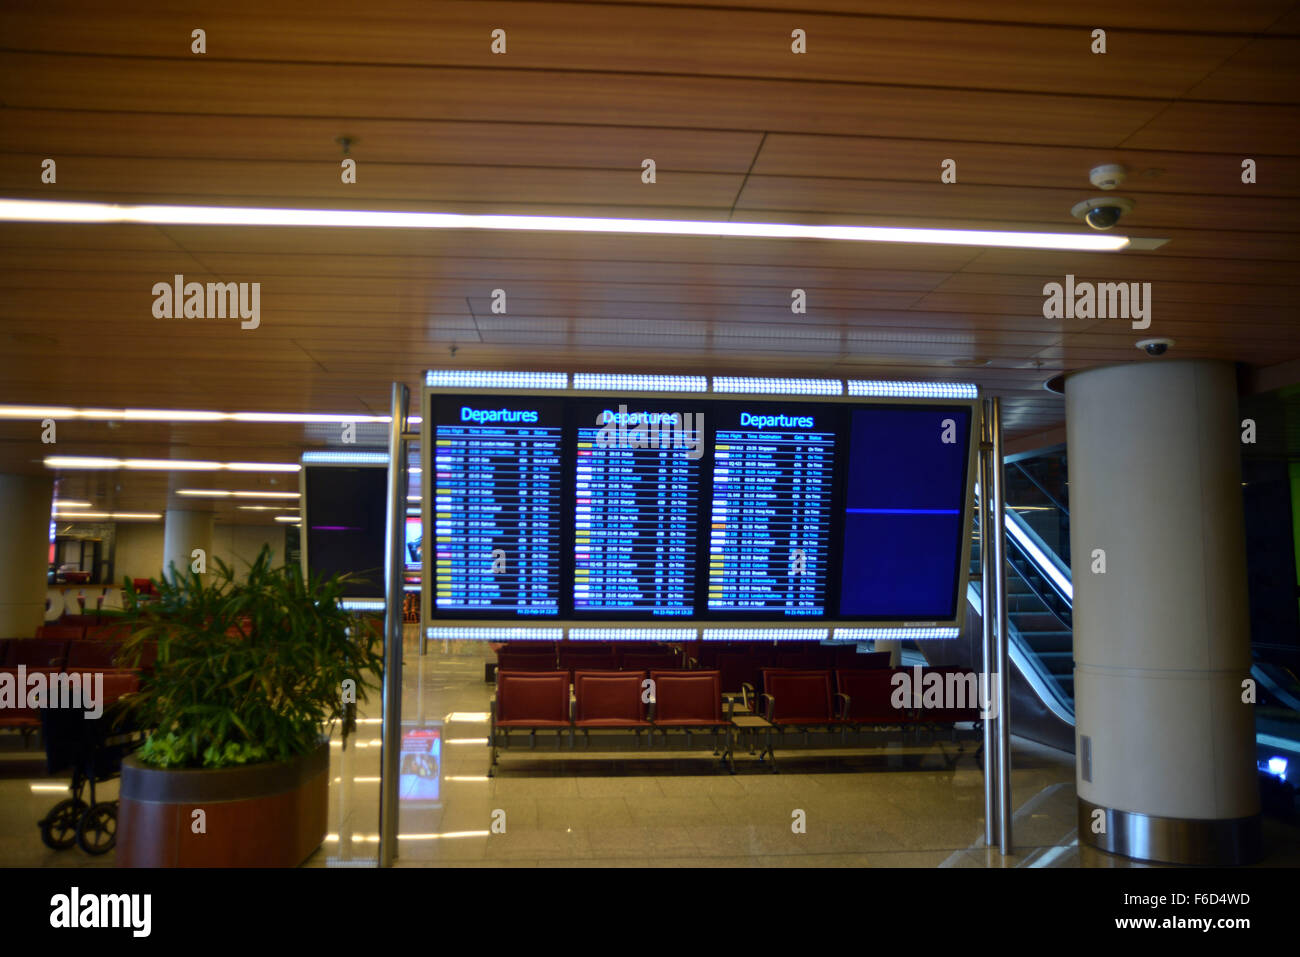 Indicador de salidas de la terminal 2 del aeropuerto, Mumbai, Maharashtra, India, Asia Foto de stock